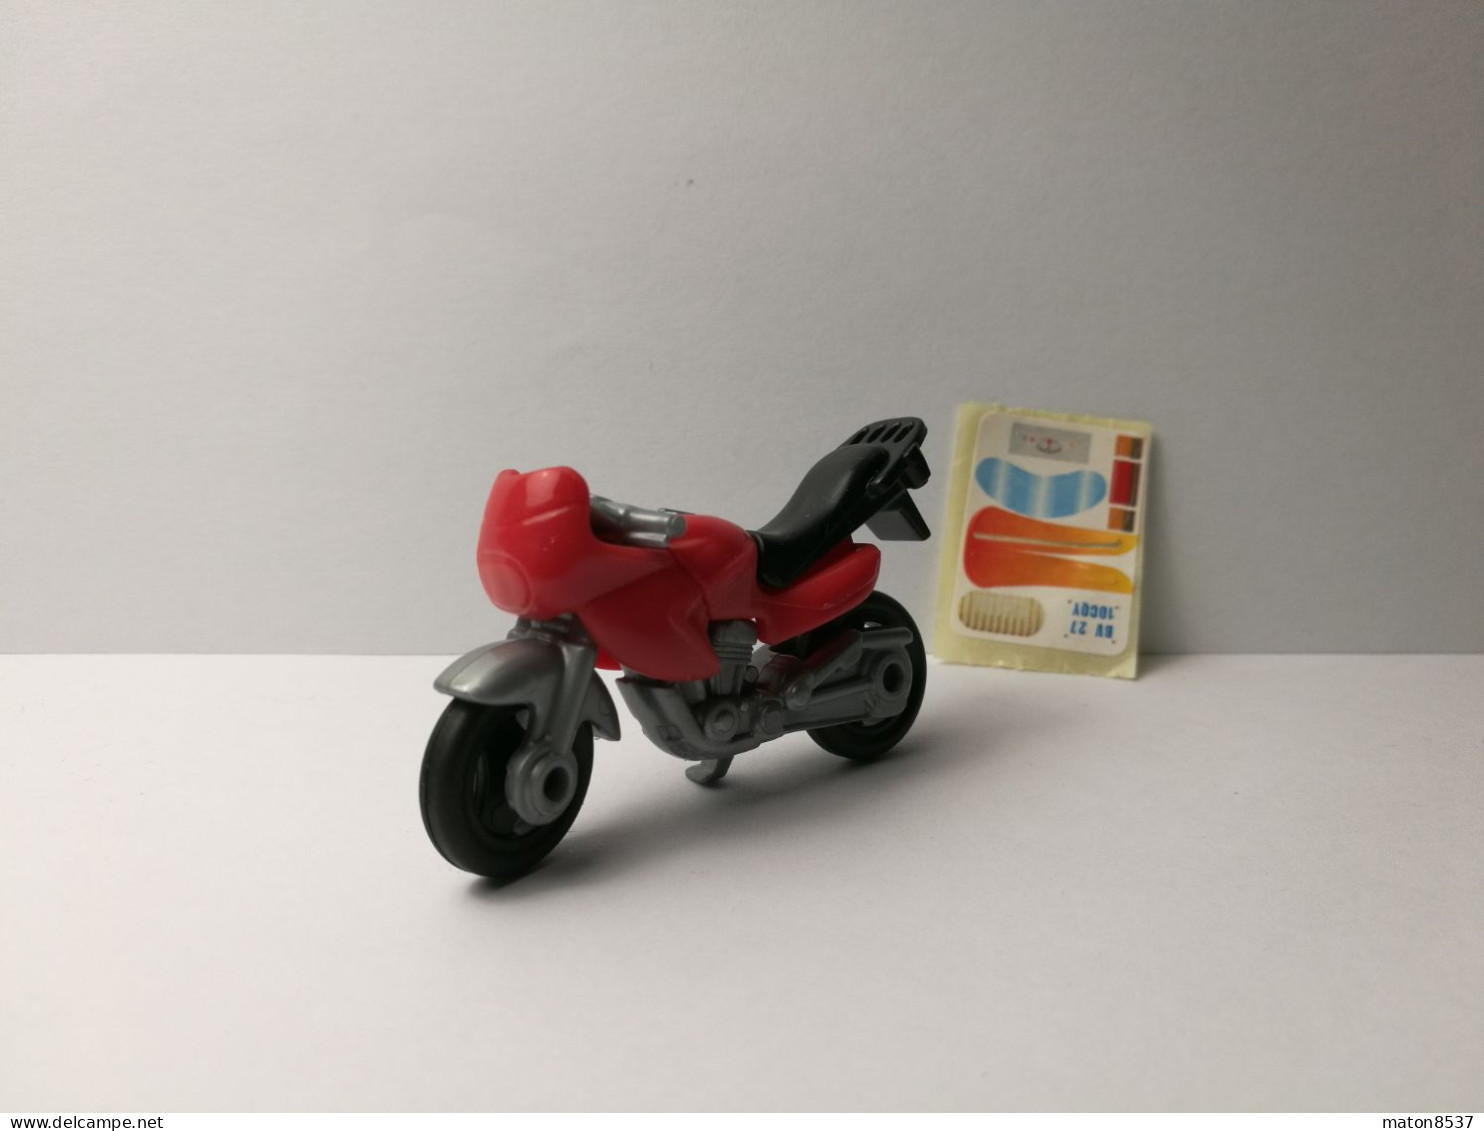 Kinder :  K04 N20  Motorräder 2003 - Modell 2  + Aufkleber - Inzetting